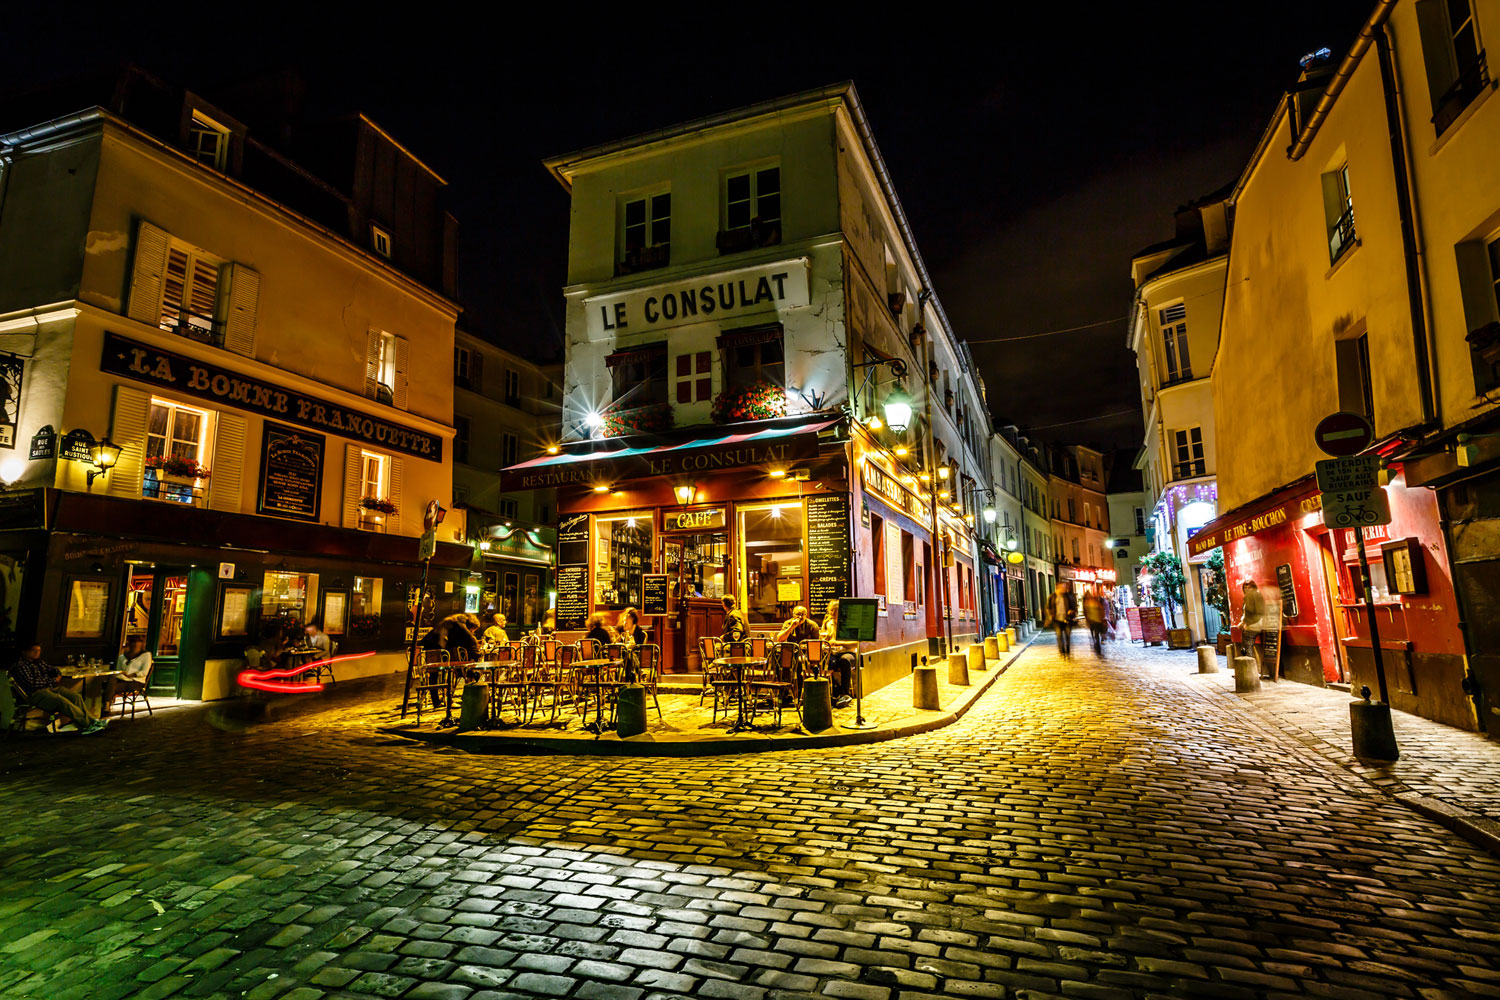 Brasserie in Paris at night